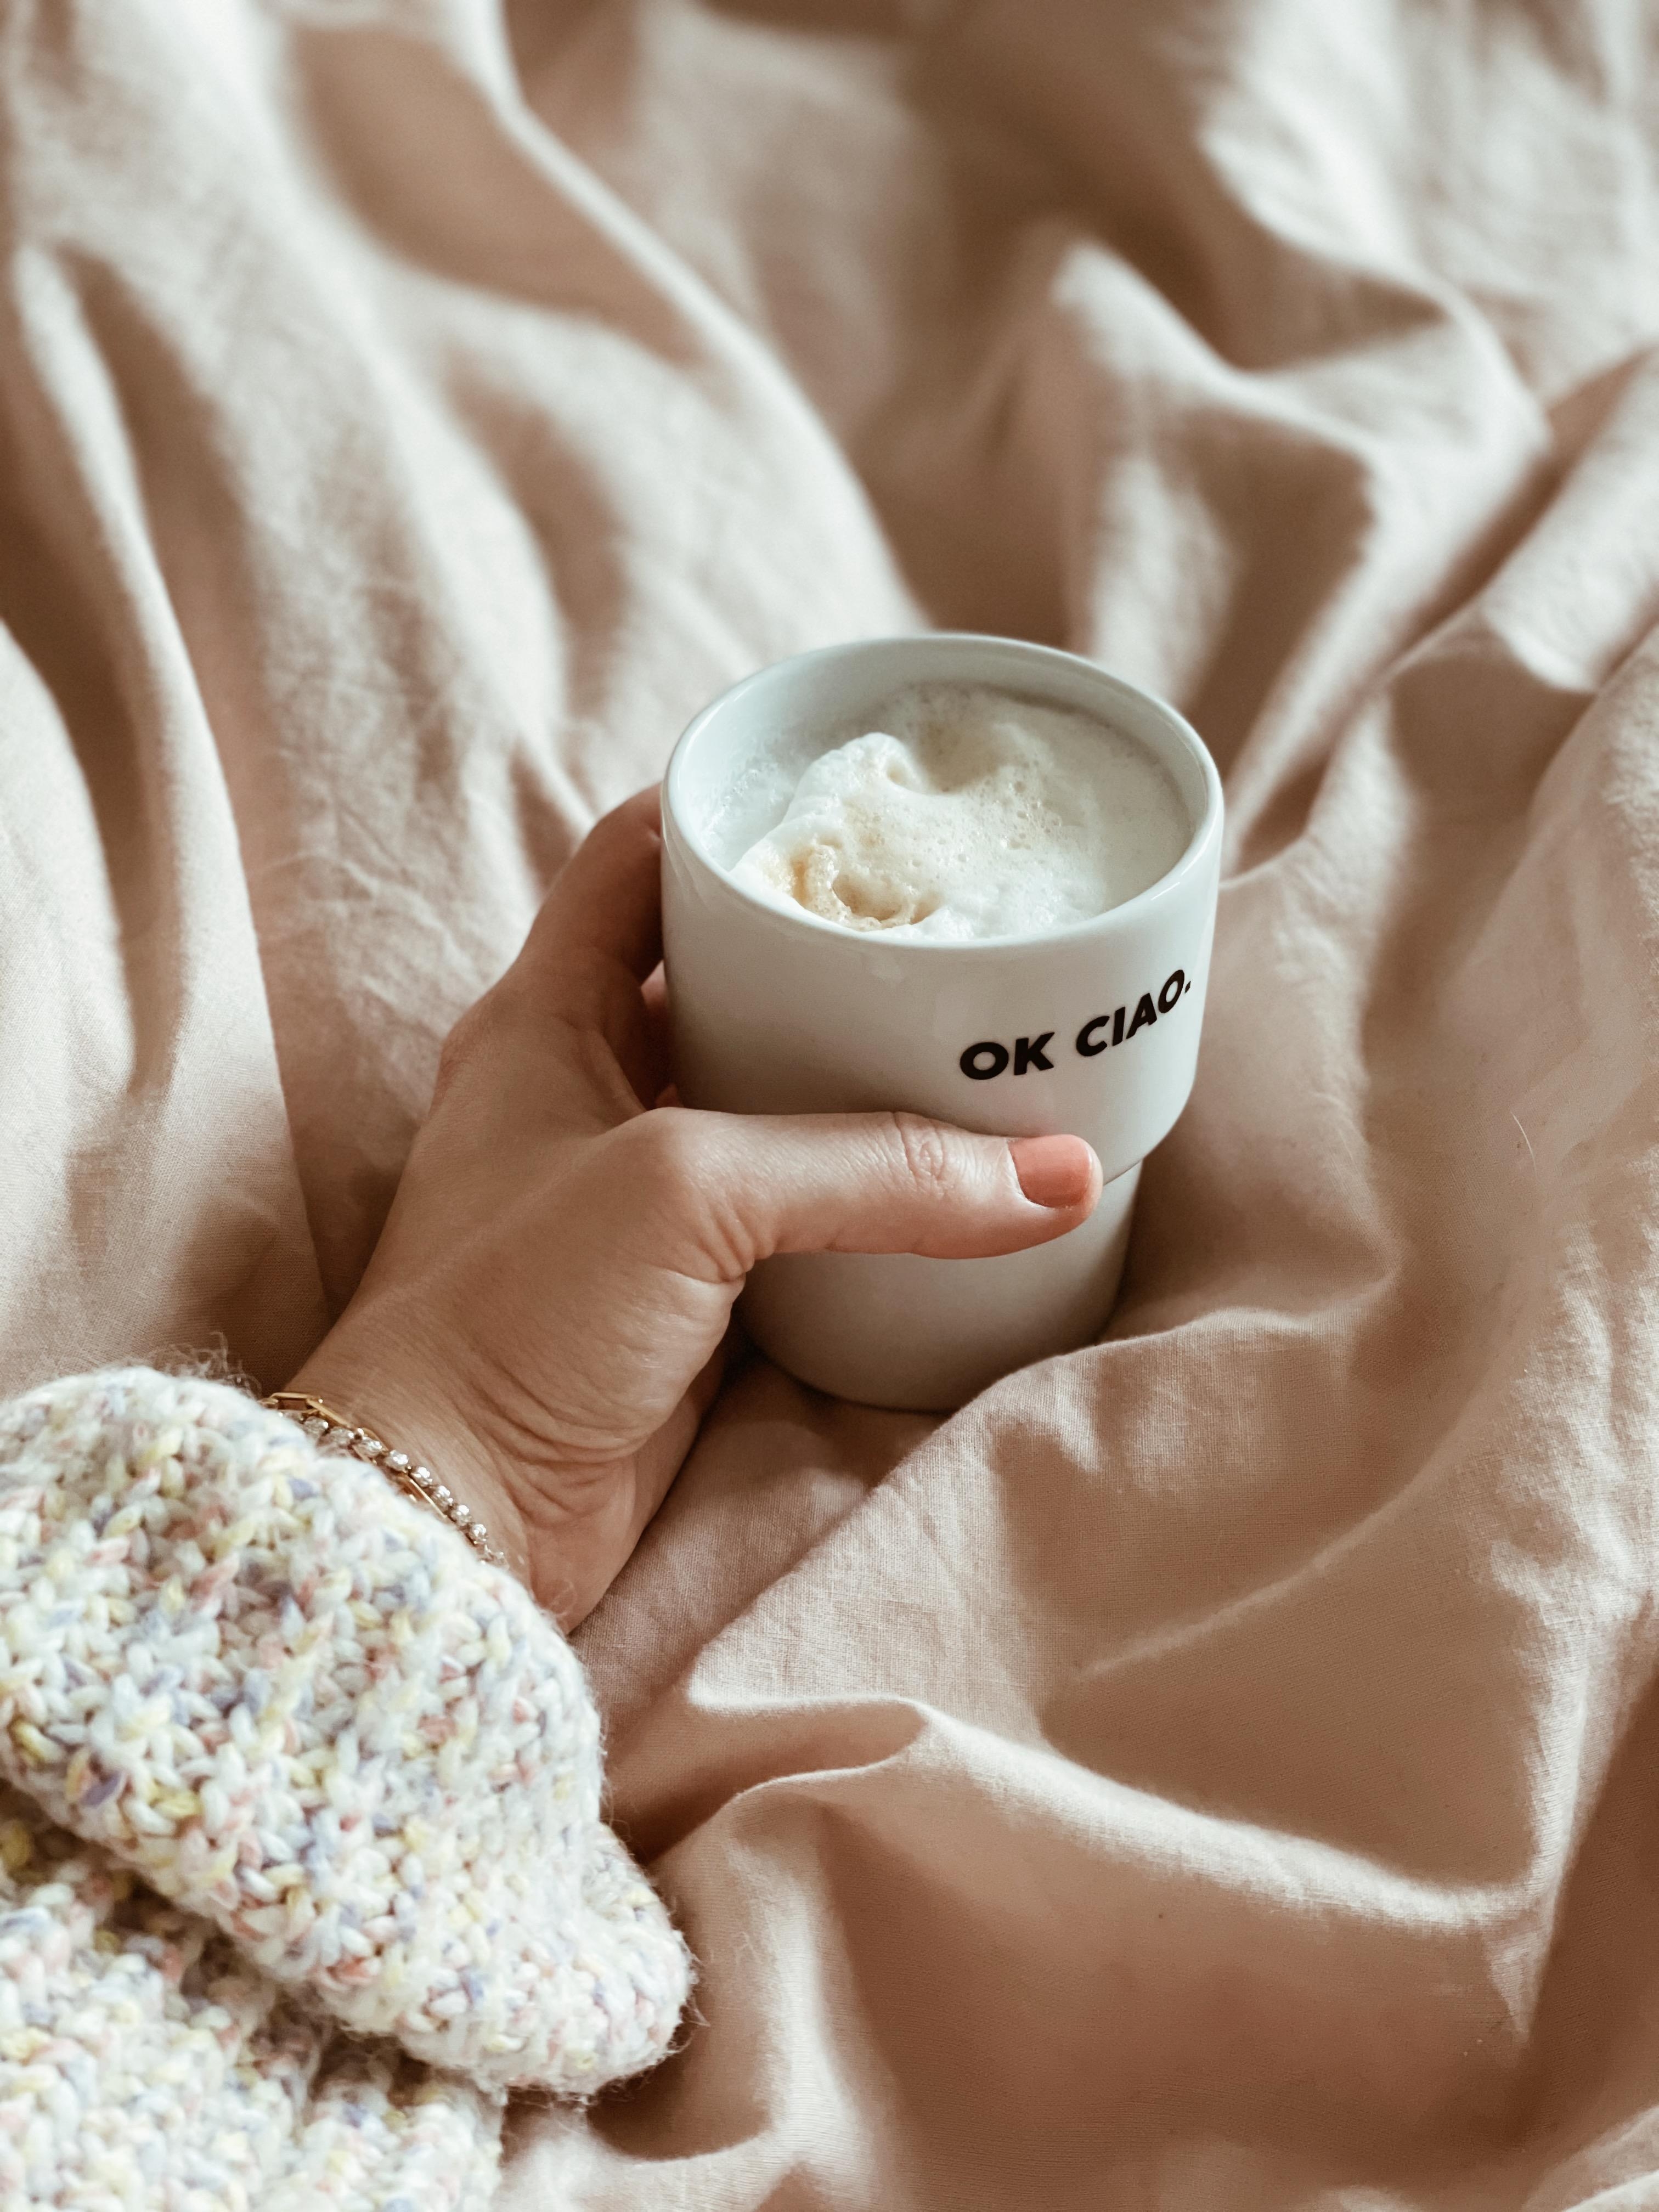 Sonntag= Kaffee im Bett 🤍
#sonntag #coffeelover #bedroom #cozy 